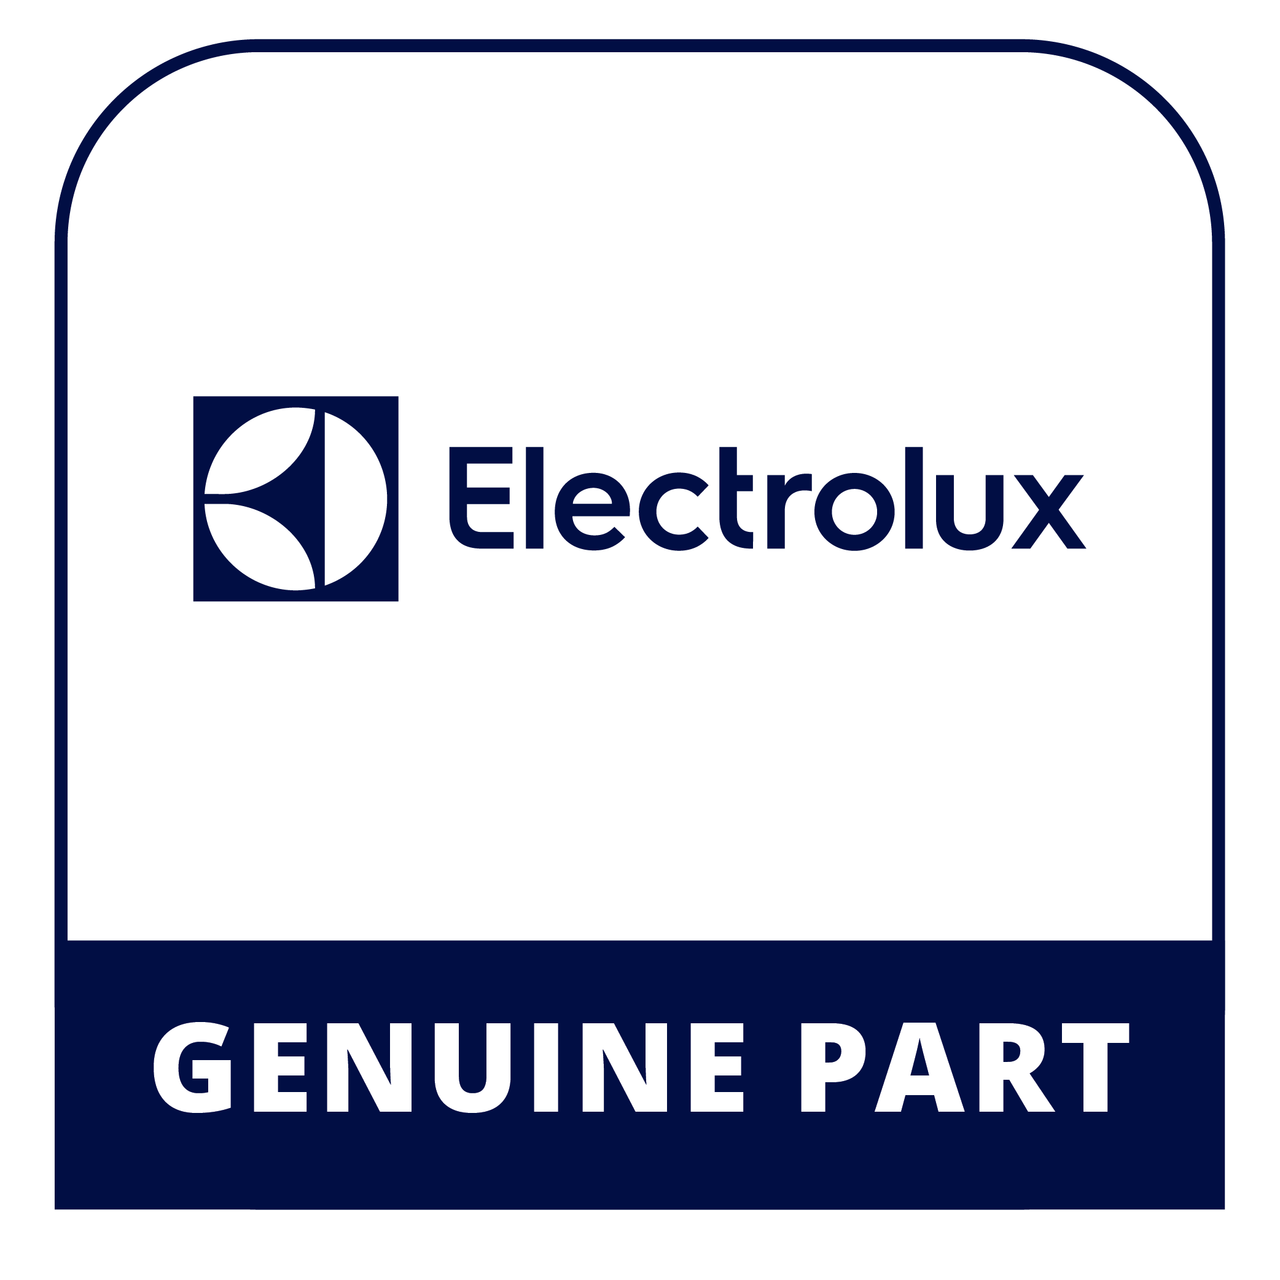 Frigidaire - Electrolux 316259203 Instructions - Genuine Electrolux Part